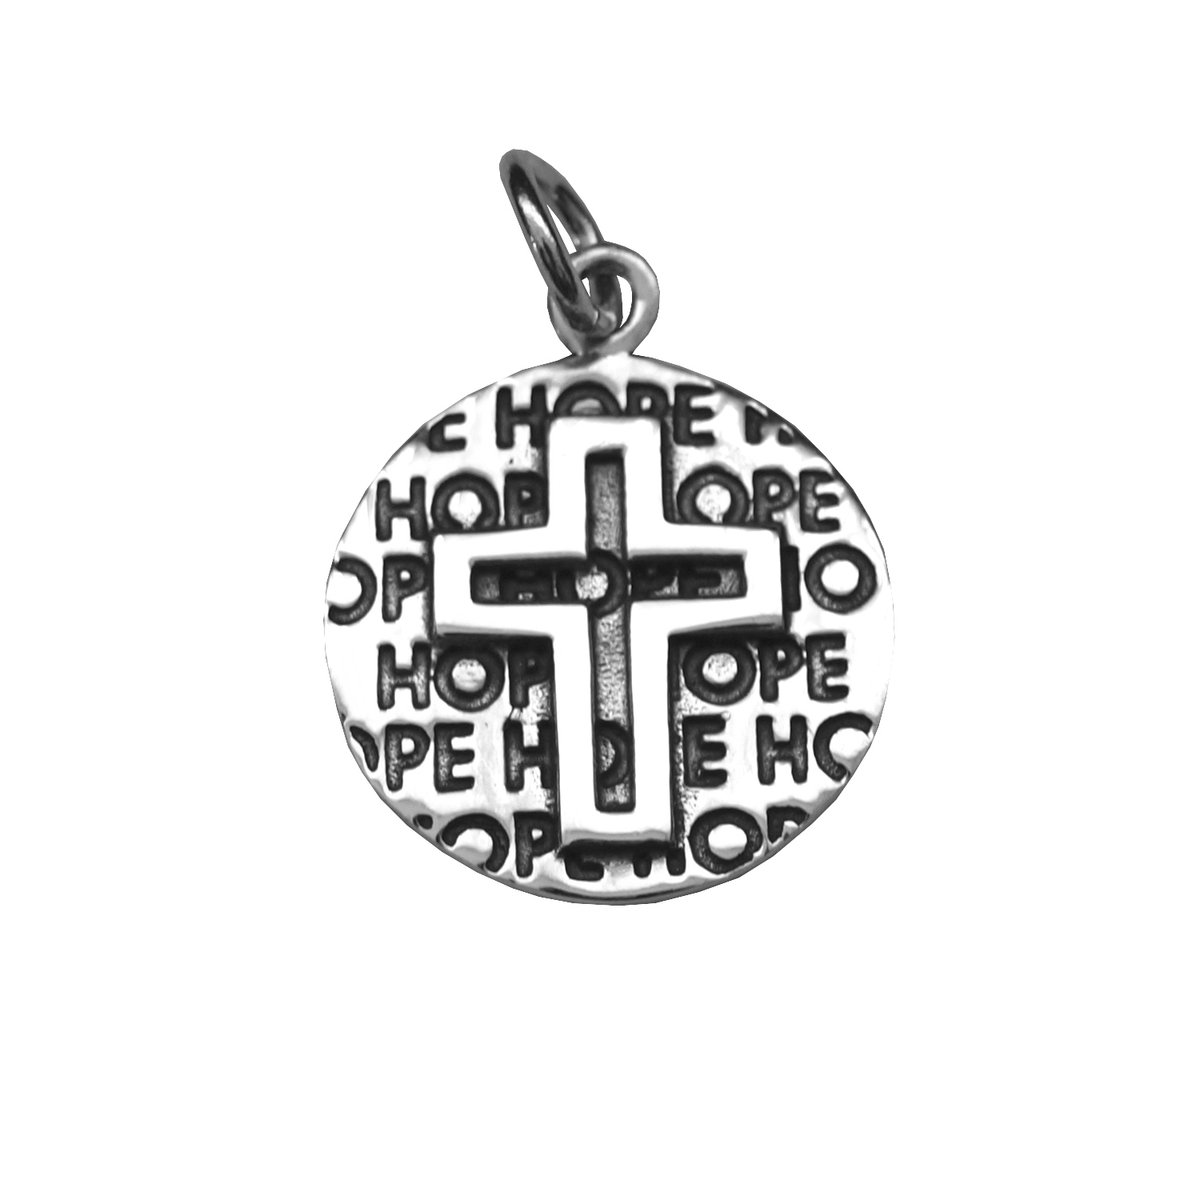 EAR IT UP - Hanger - Kruis - Hoop - Christelijk - God - Cross - Hope - 925 sterling zilver - Geoxideerde details - 25 x 17 mm - 1 stuk